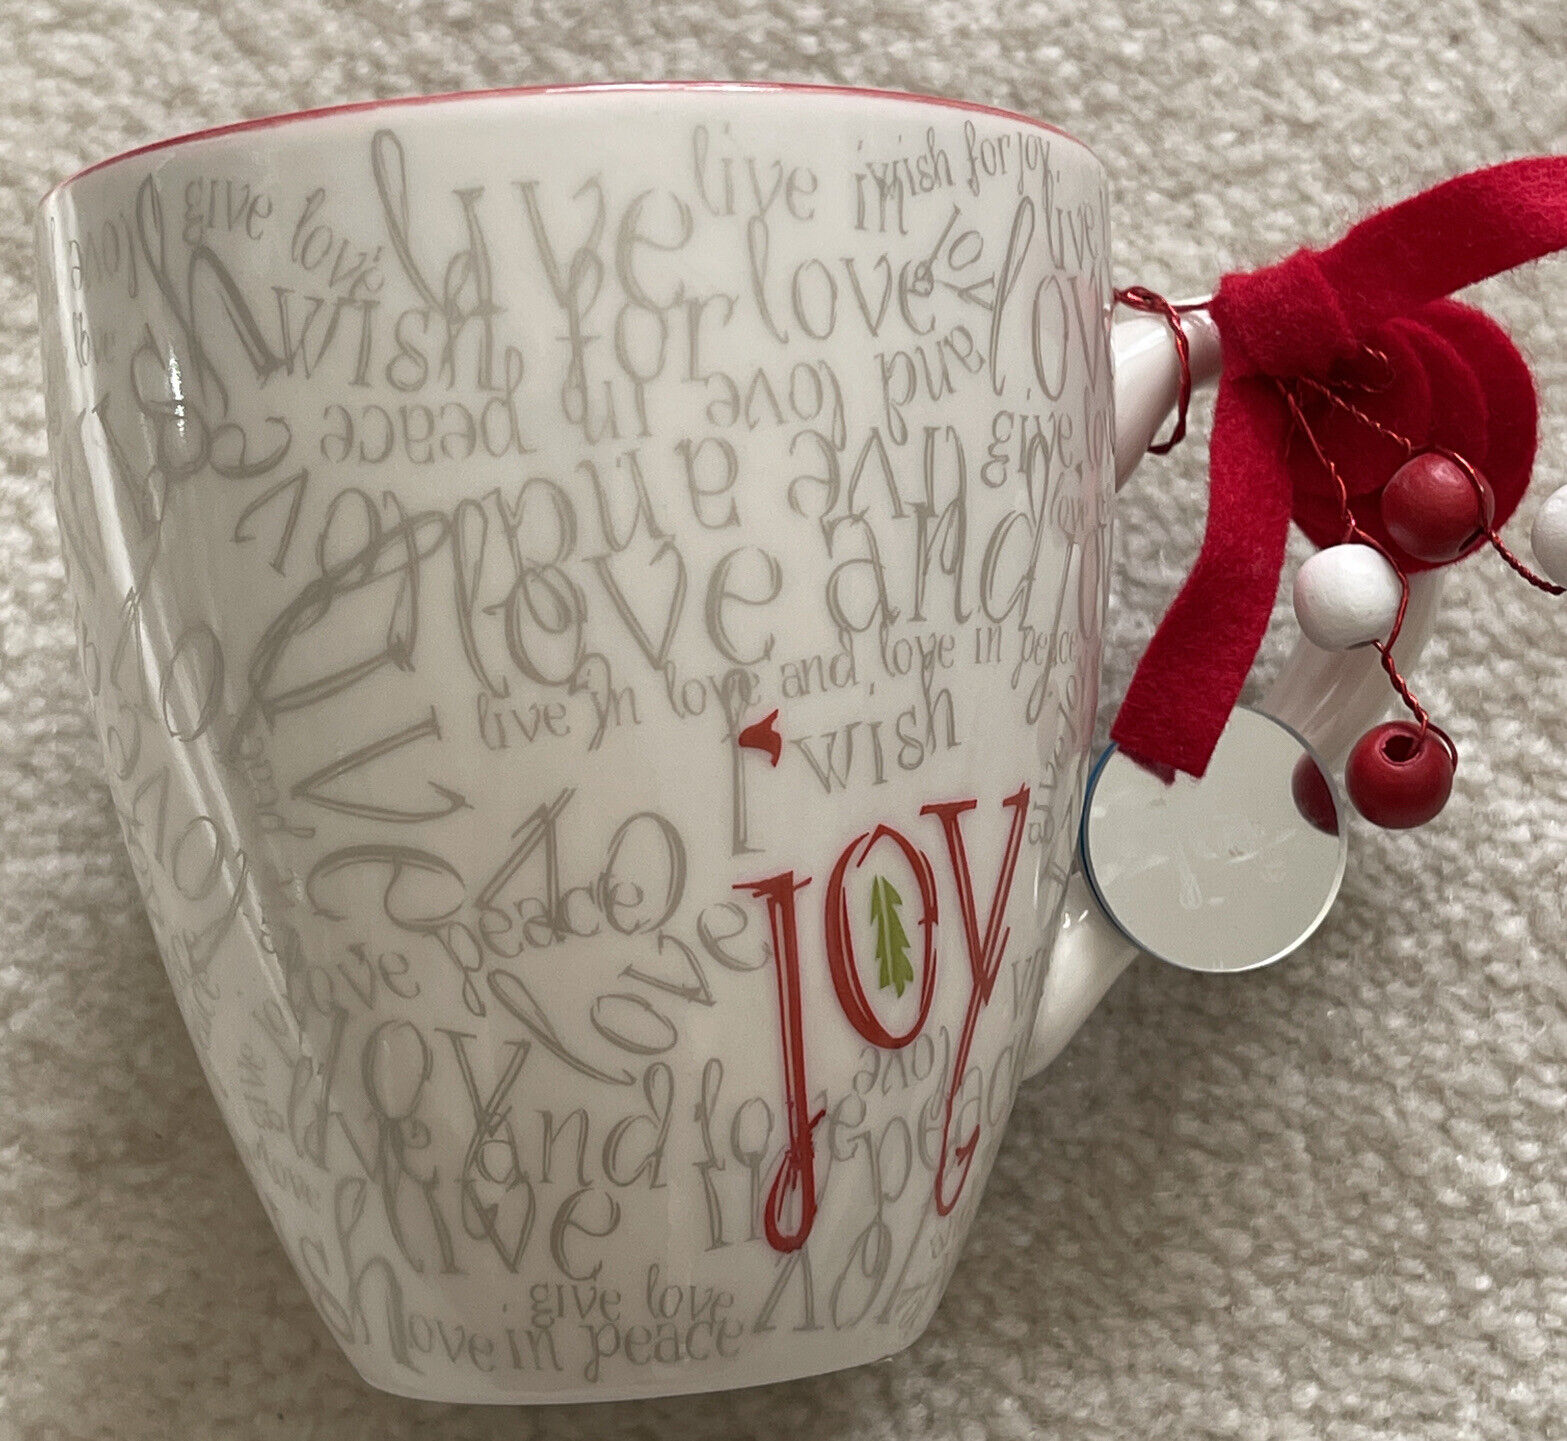 Starbucks Unused Christmas 2005 Joy Wish Love 12 oz Mug Original Tag & Decor